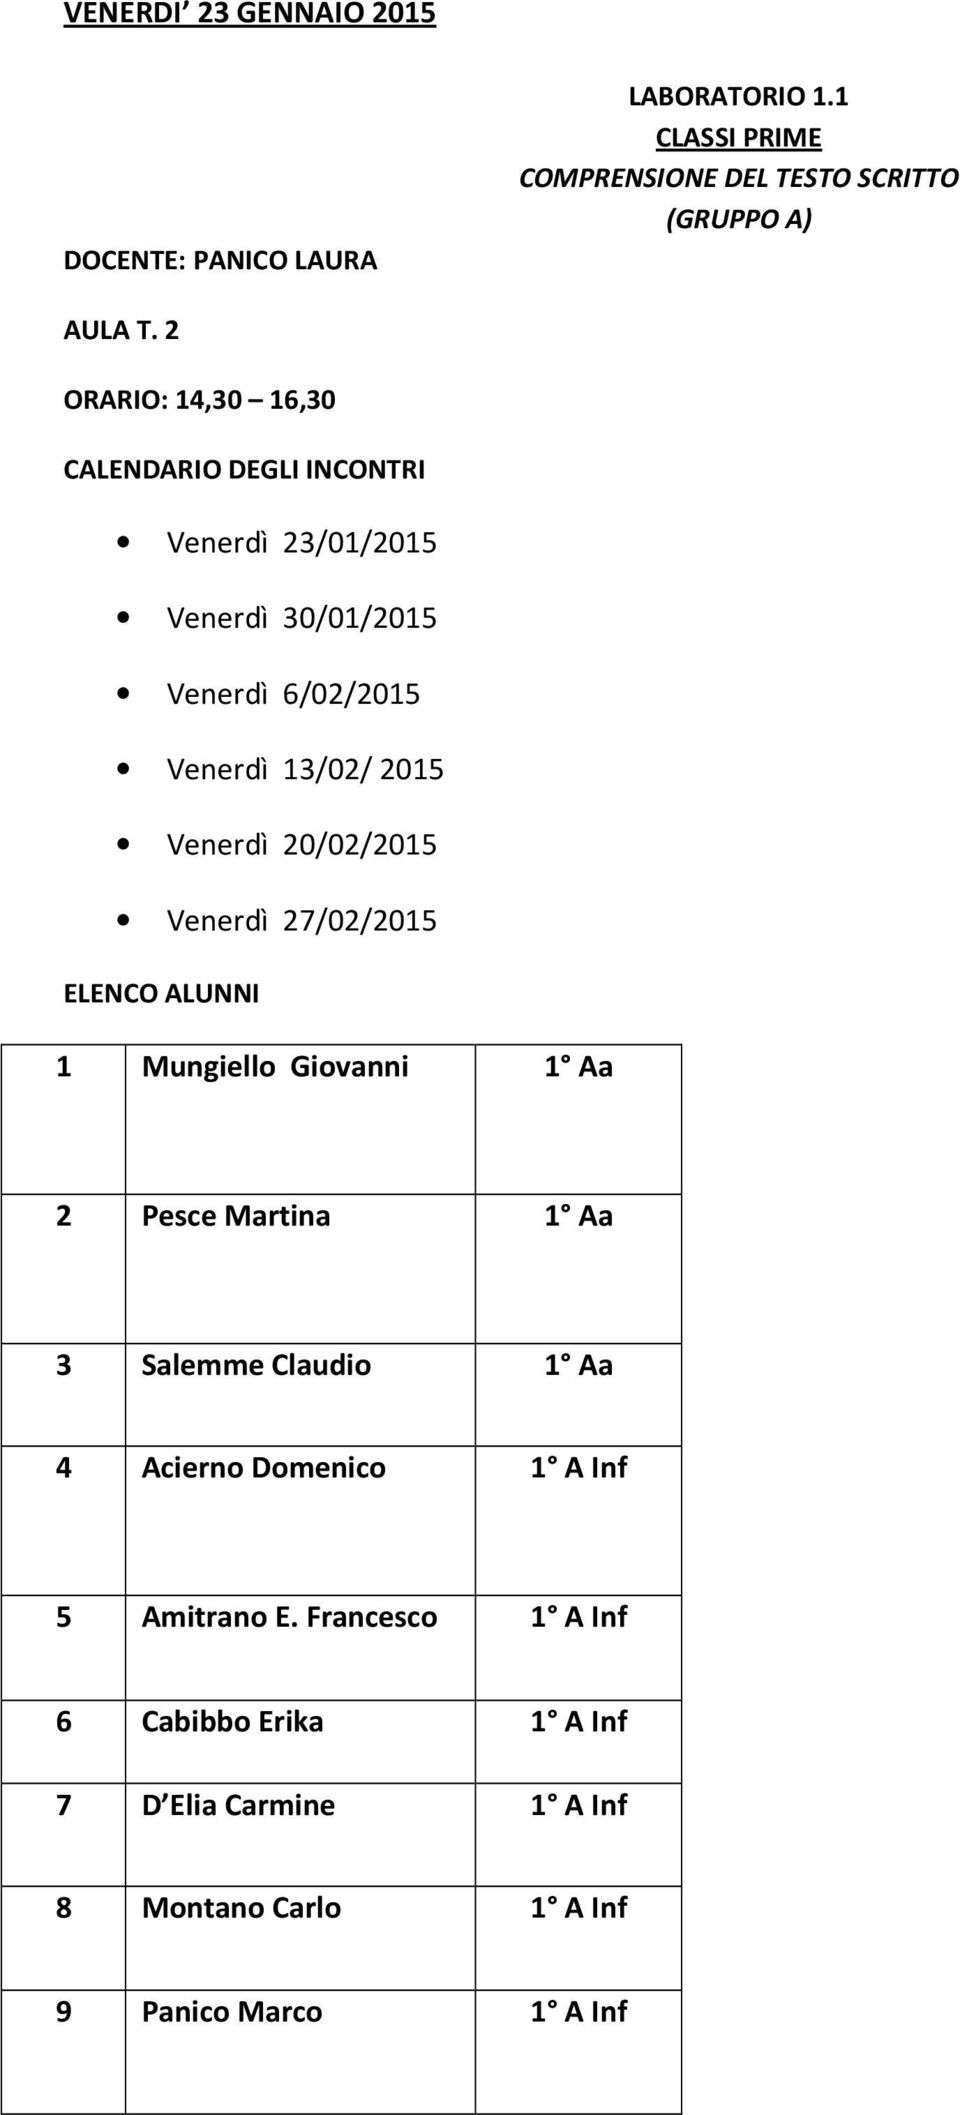 20/02/2015 Venerdì 27/02/2015 ELENCO ALUNNI 1 Mungiello Giovanni 1 Aa 2 Pesce Martina 1 Aa 3 Salemme Claudio 1 Aa 4 Acierno